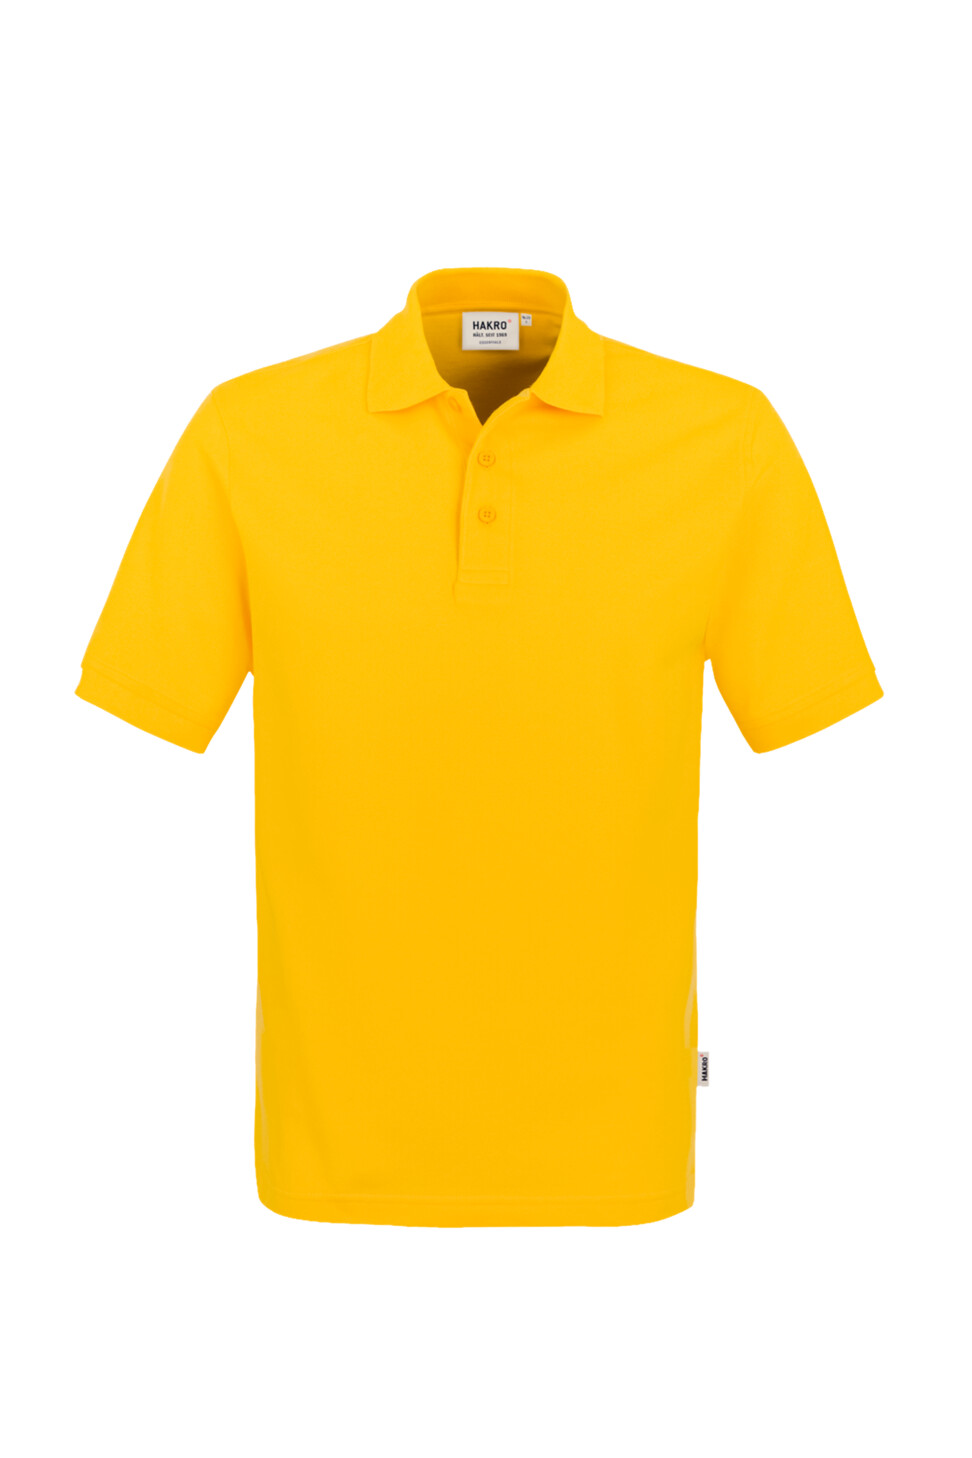 HAKRO Poloshirt Classic, sonne, XL, 810